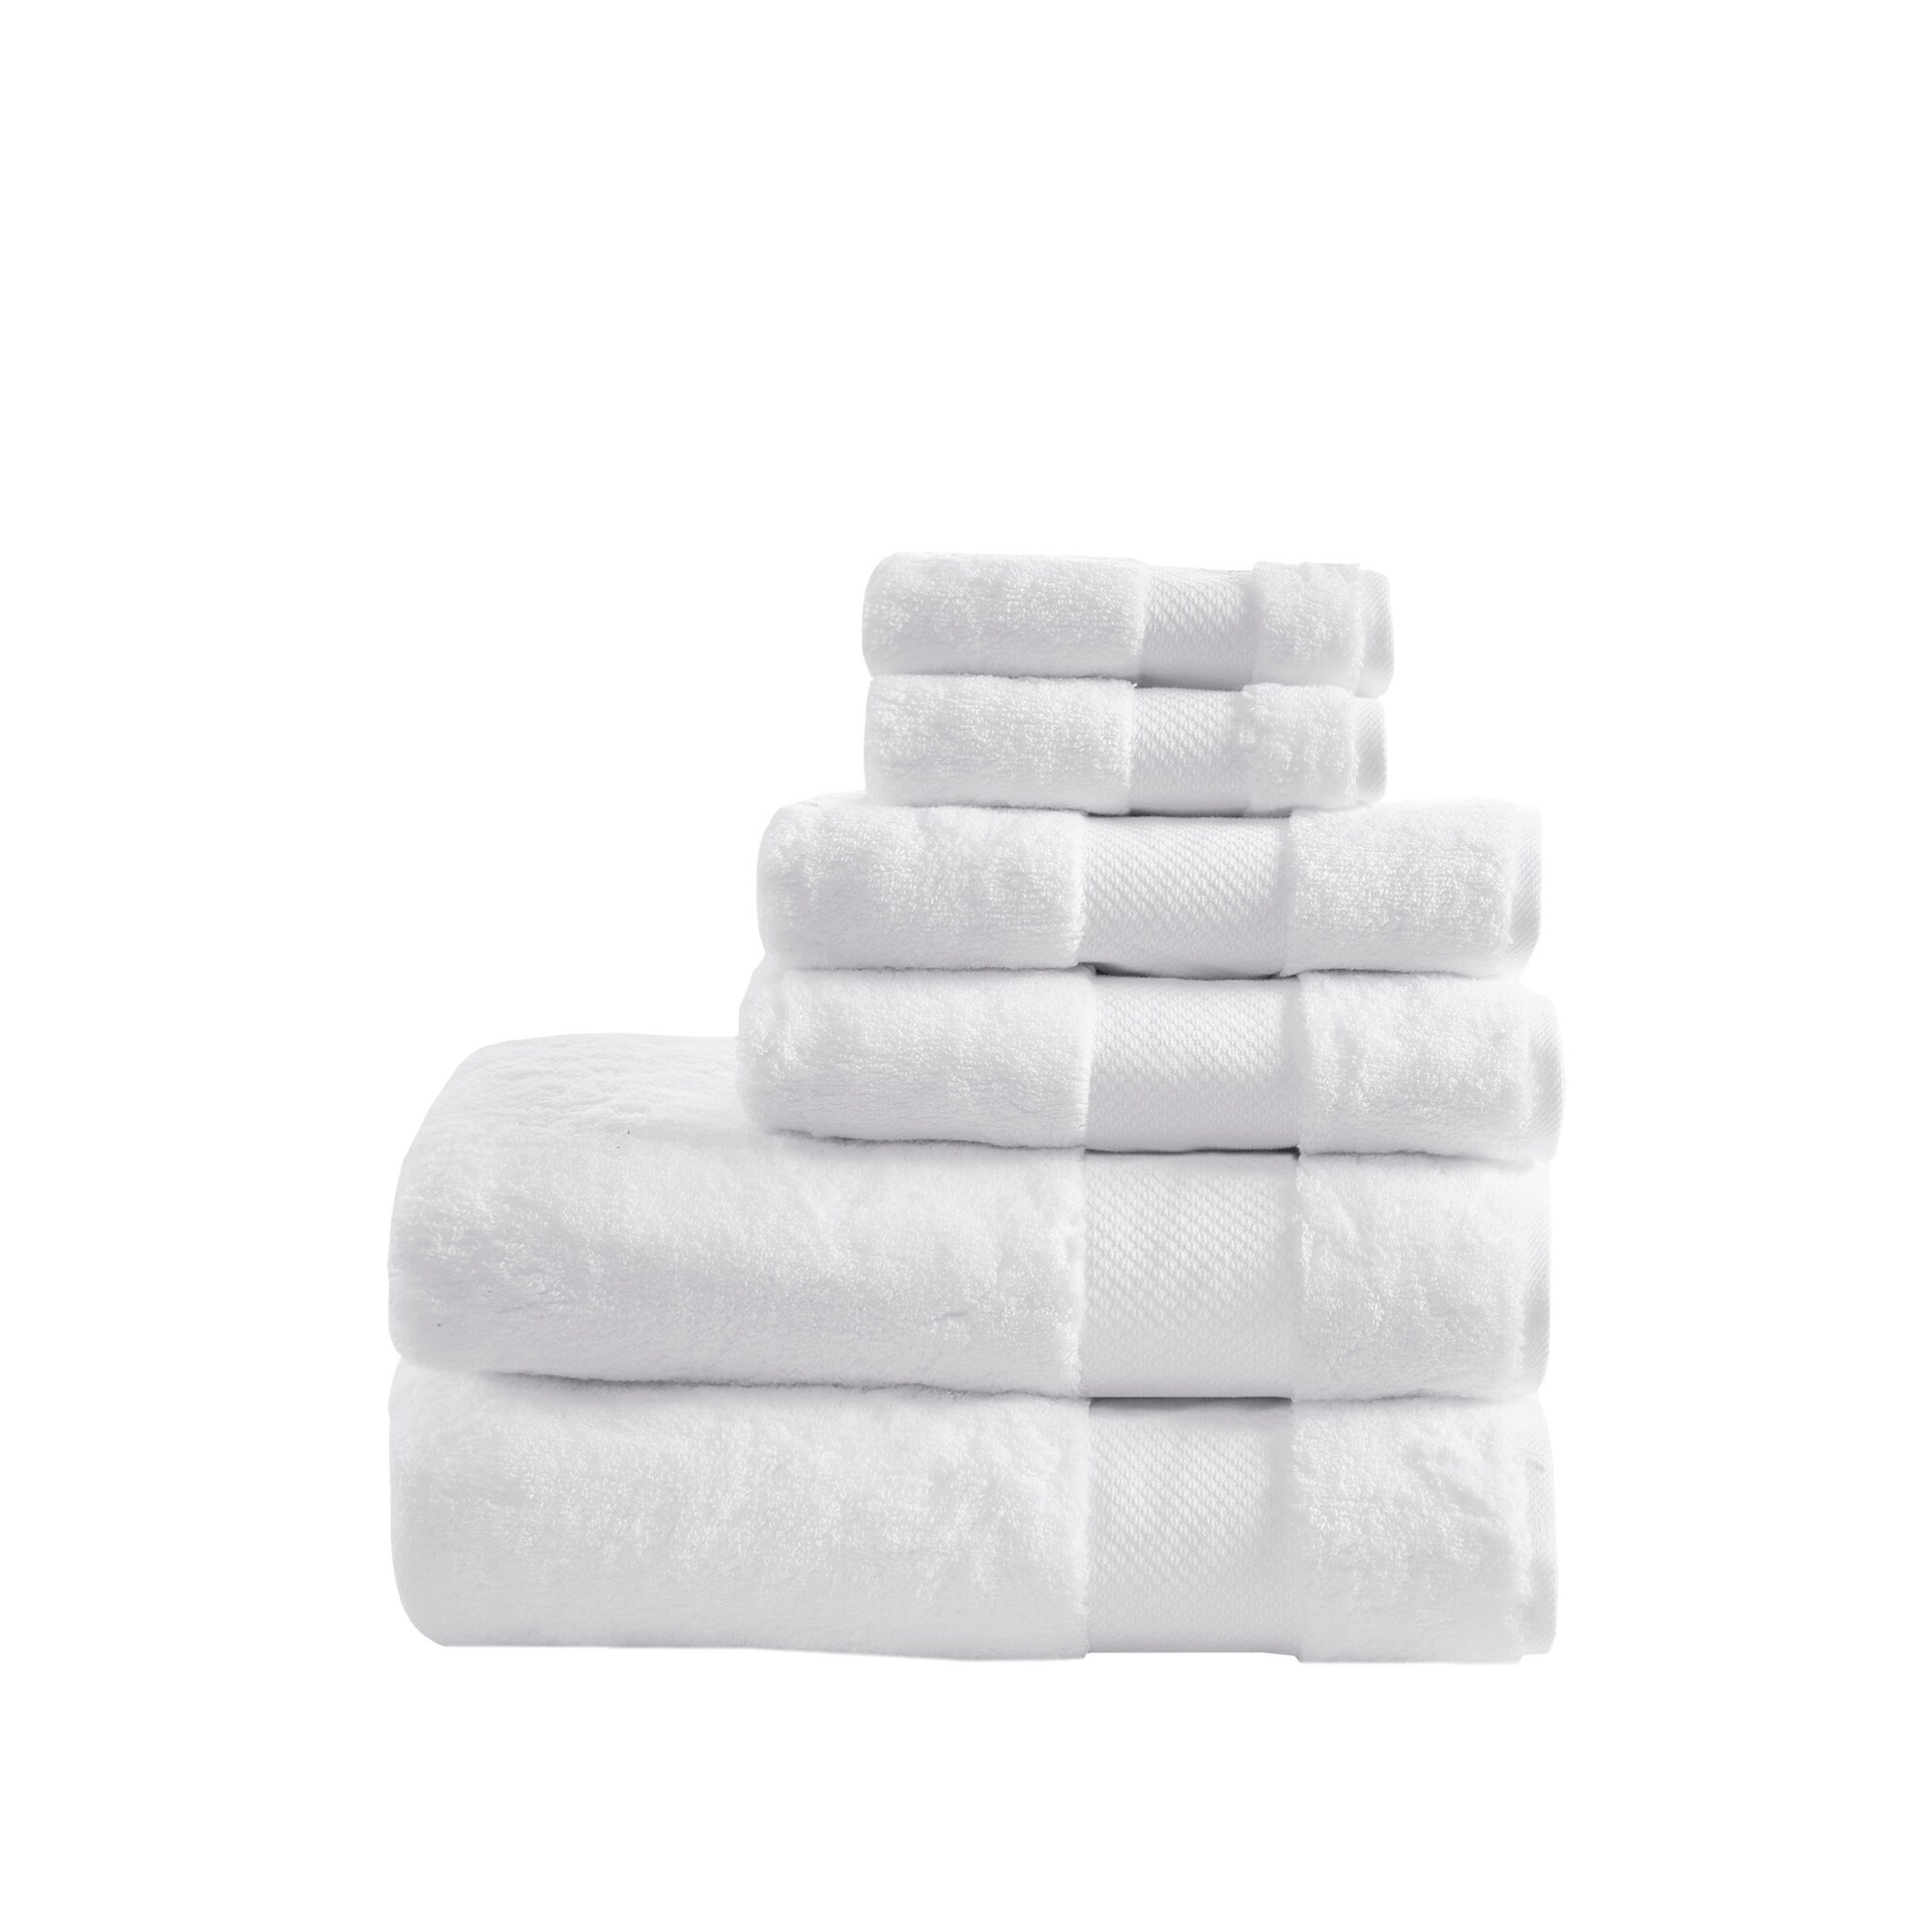 https://ak1.ostkcdn.com/images/products/is/images/direct/2291c5c2e479f4f6a70f04e04593303b484966ca/Madison-Park-Signature-Turkish-Cotton-6-Piece-Bath-Towel-Set.jpg